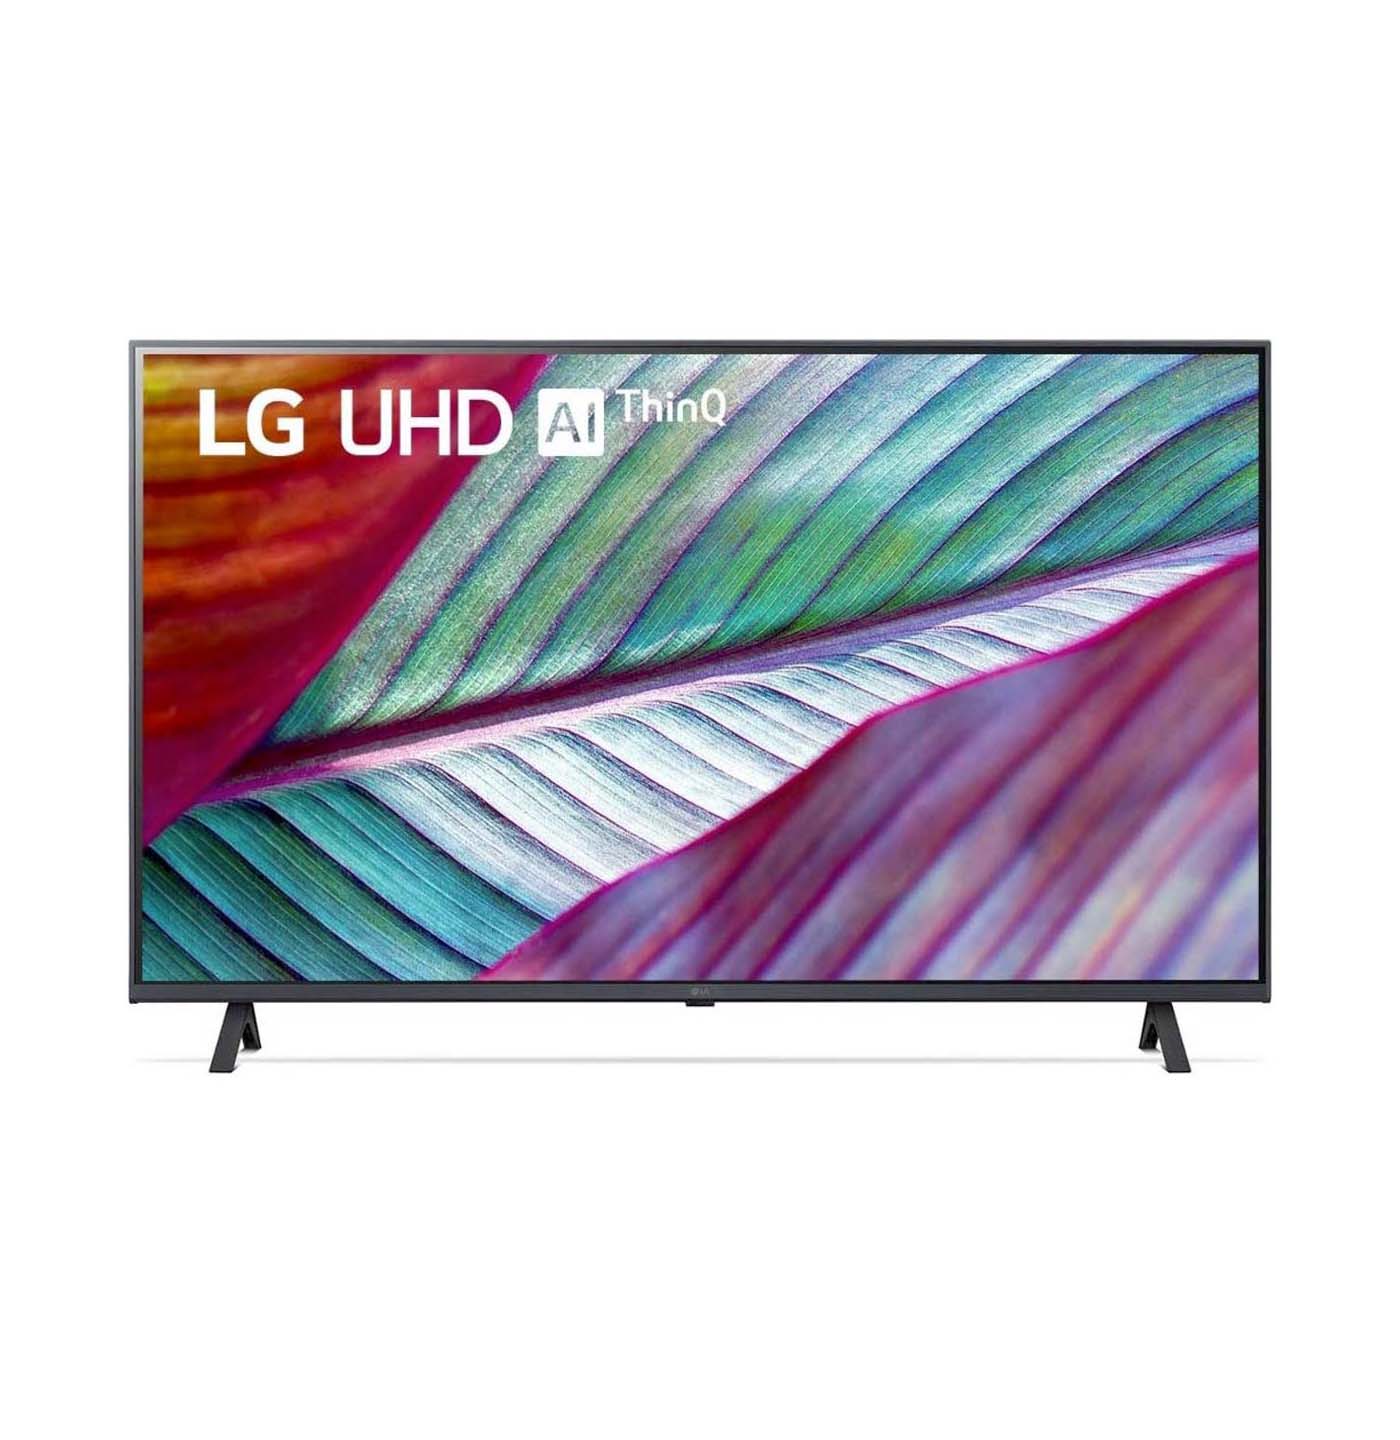 LG TV LED Ultra HD 4K 55